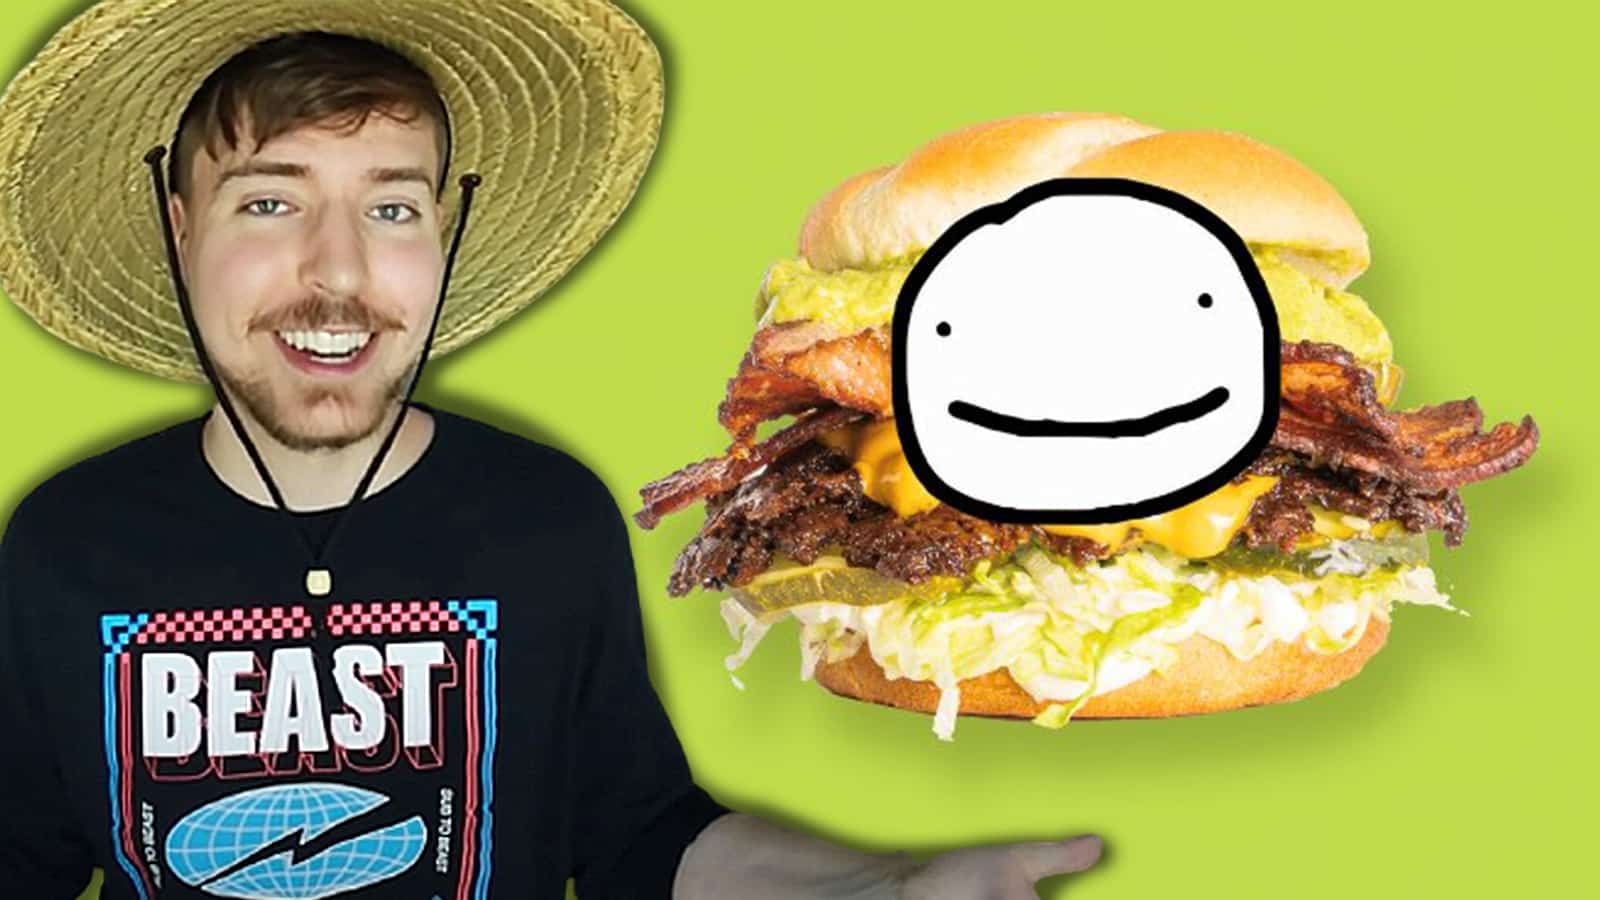 MrBeast Burger Introduces New Dream Burger - Chew Boom